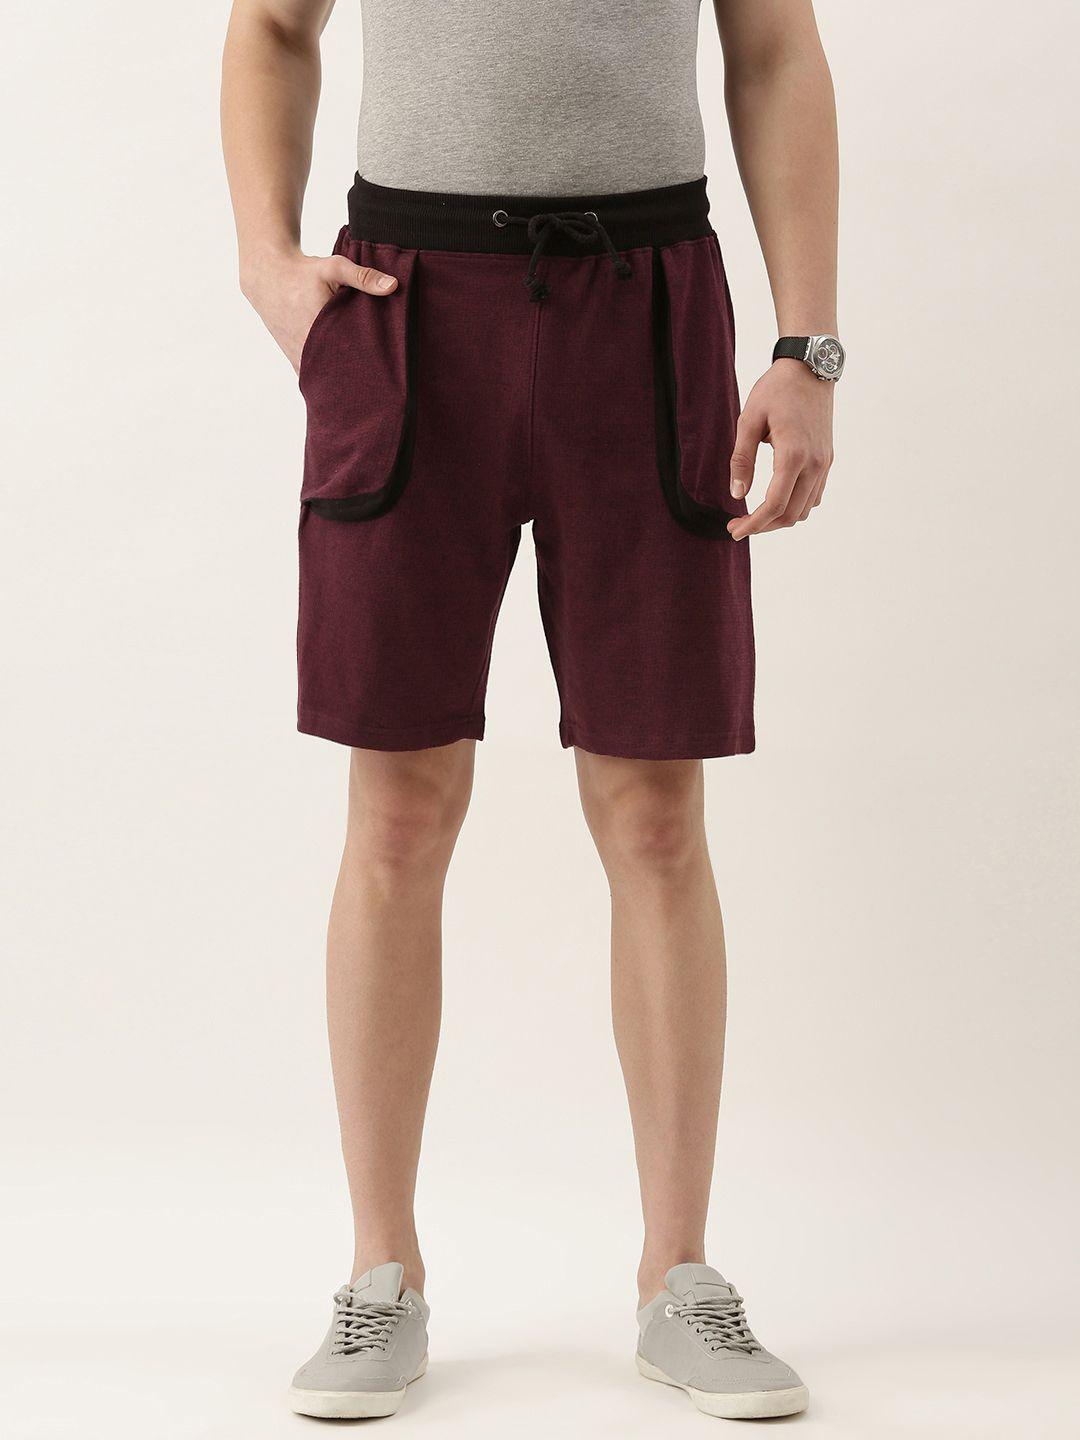 arise men burgundy solid shorts